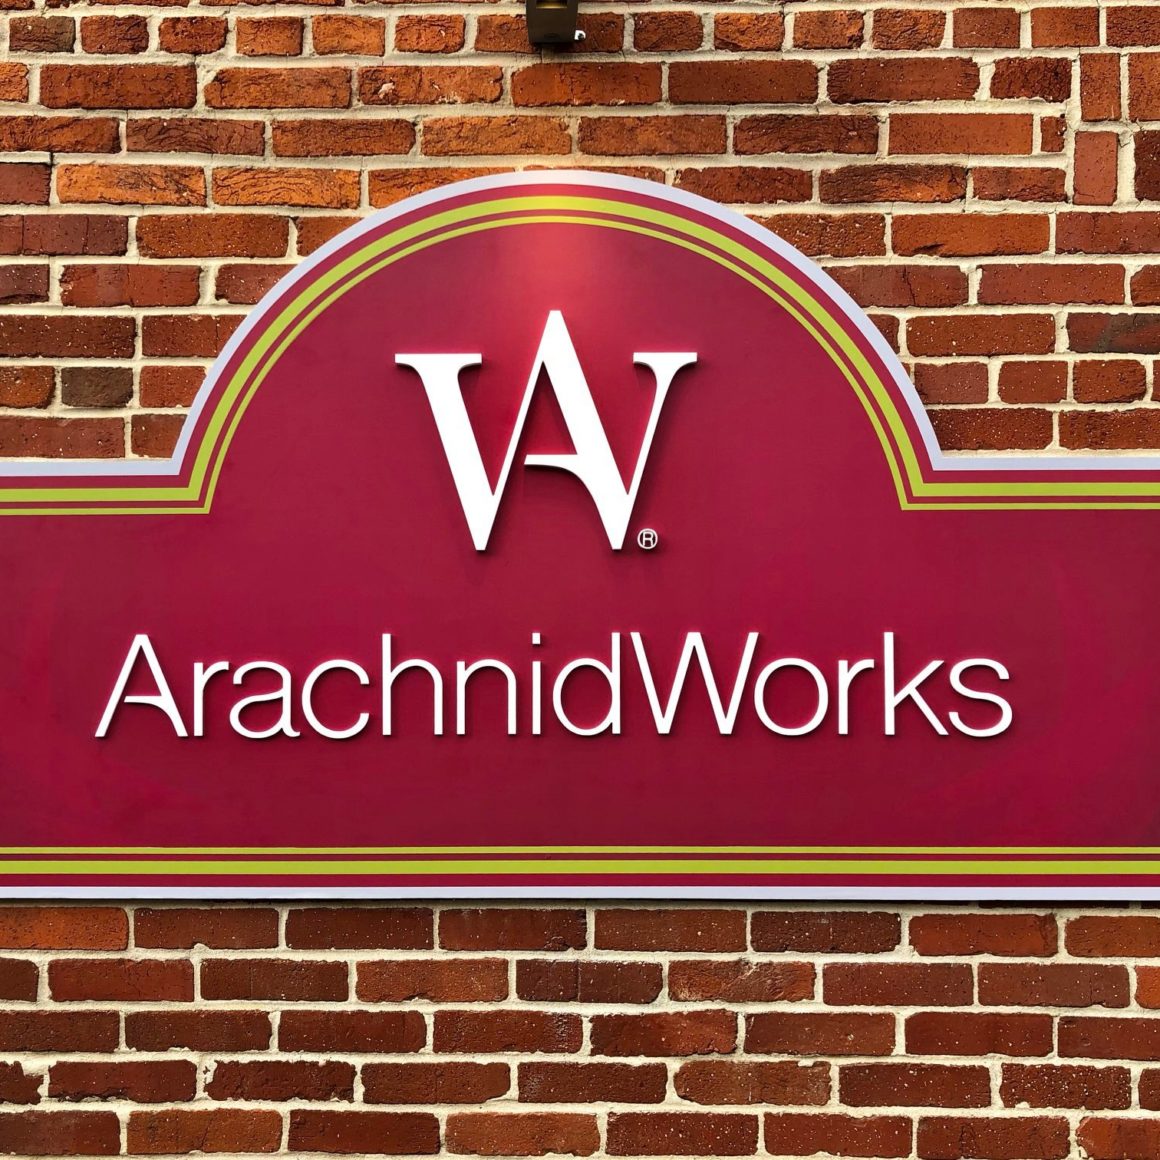 arachnidworks sign